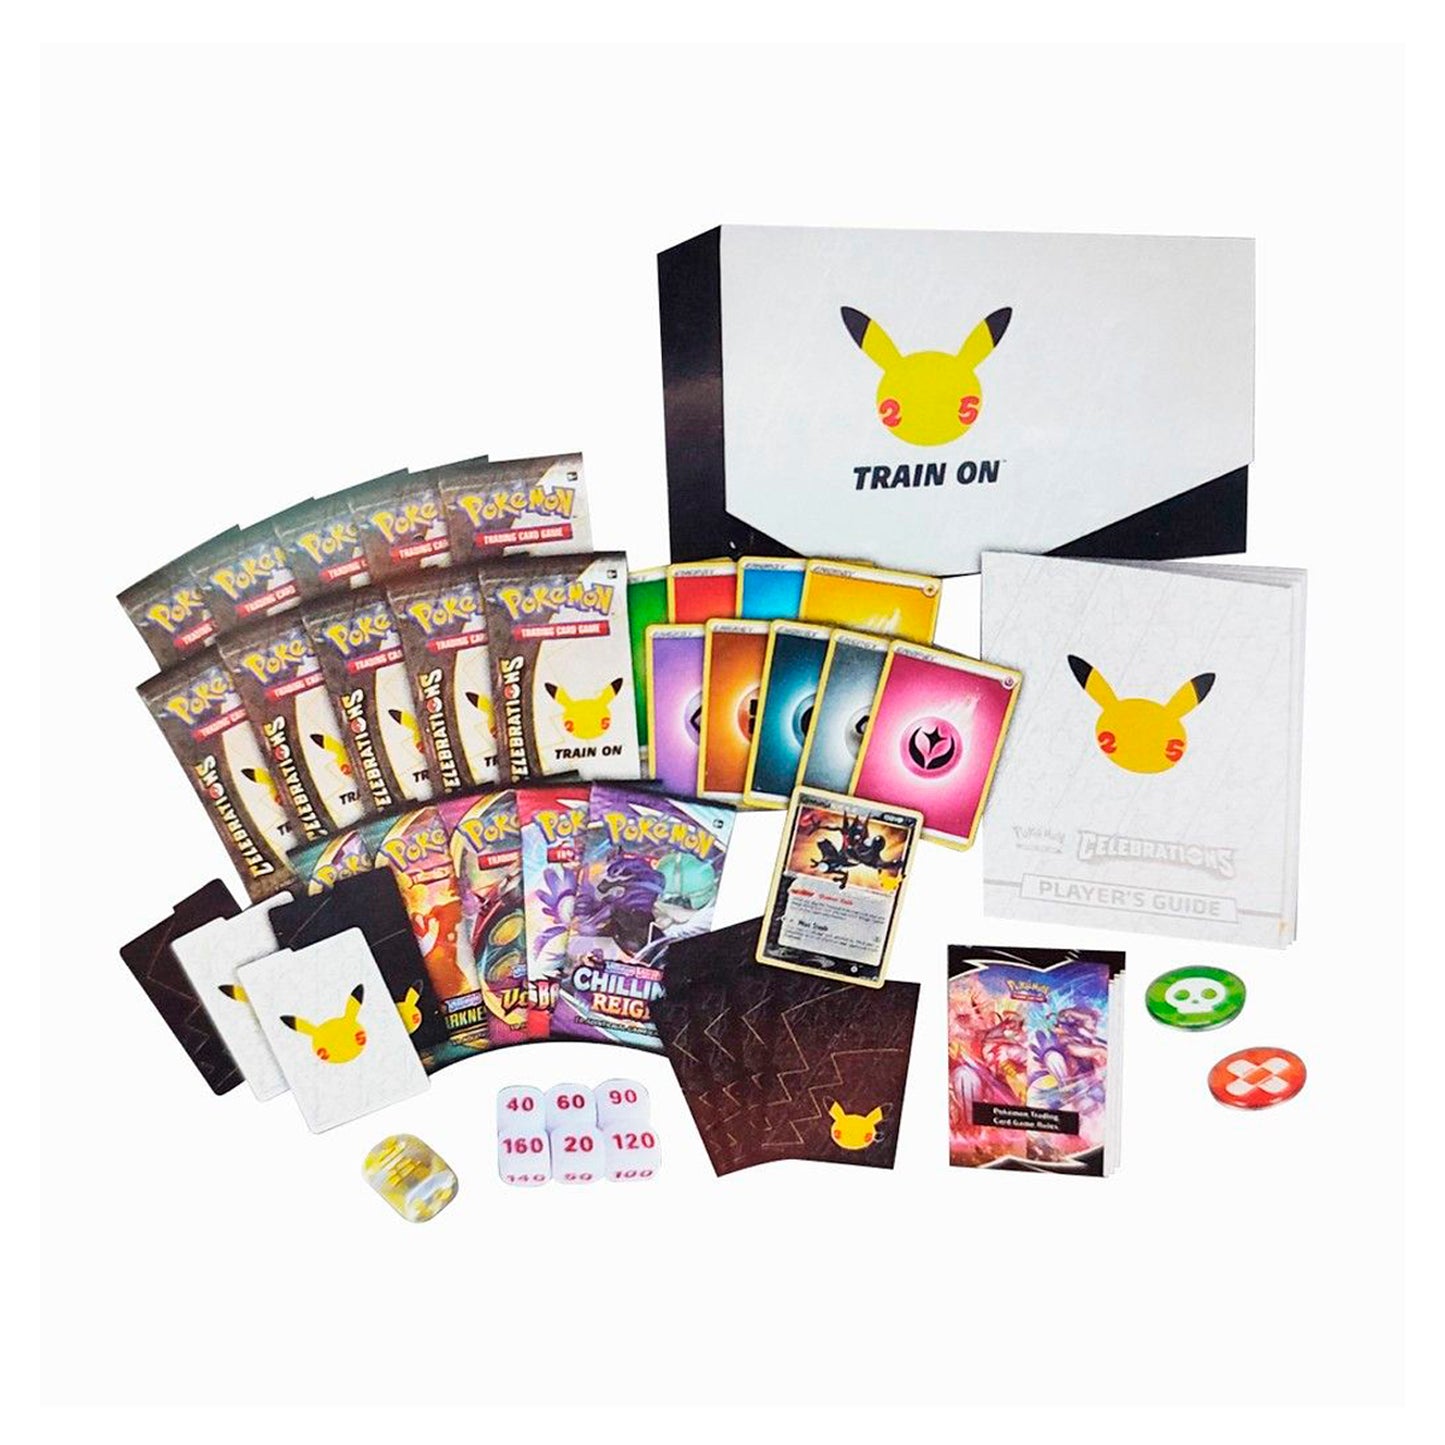 Pokemon Celebrations Elite Trainer Box